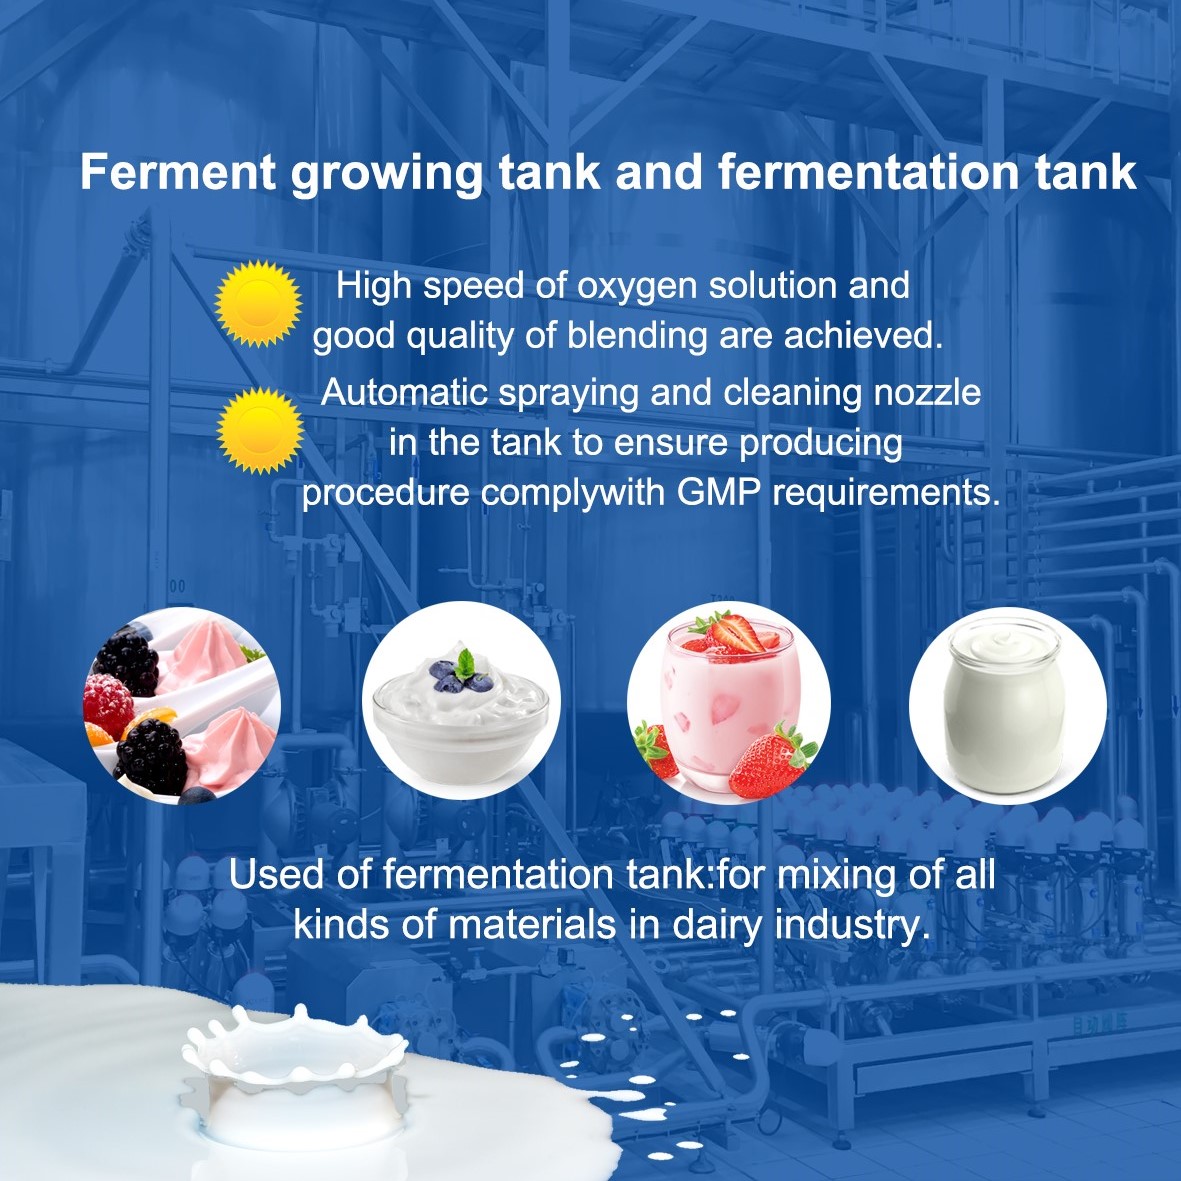 Ferment growing tank and fermentation tank